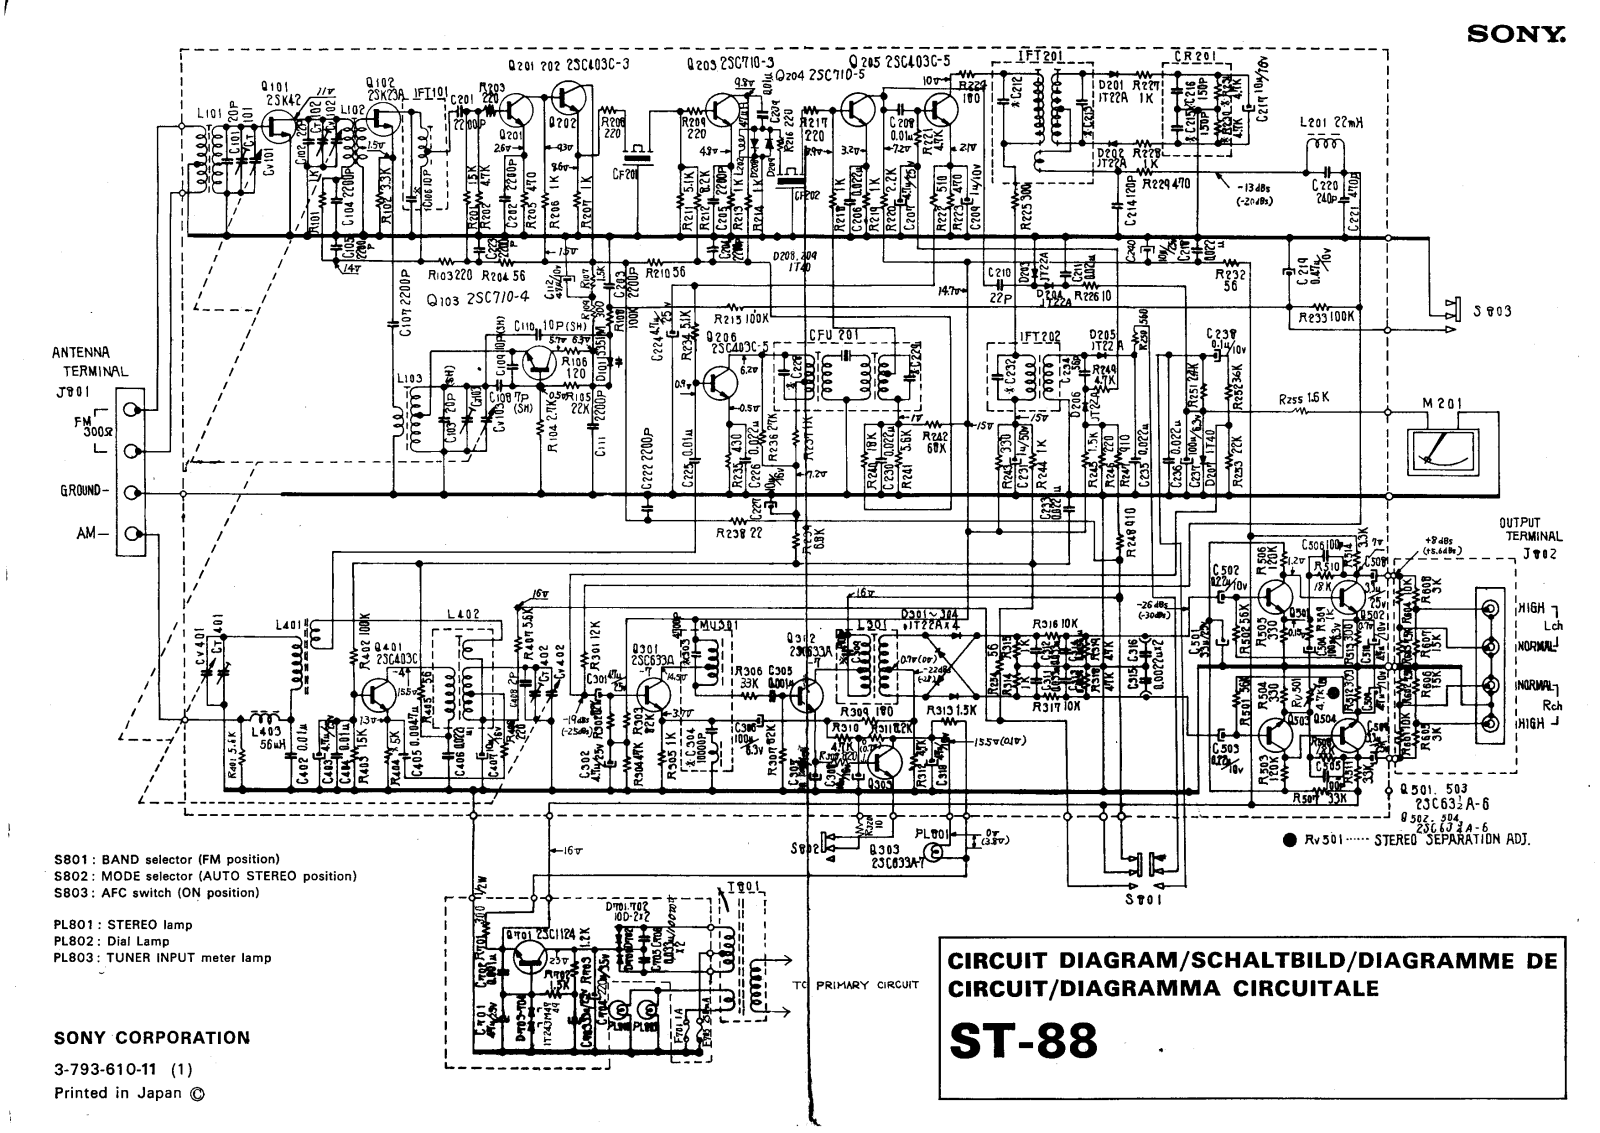 Sony ST-88 Schematic